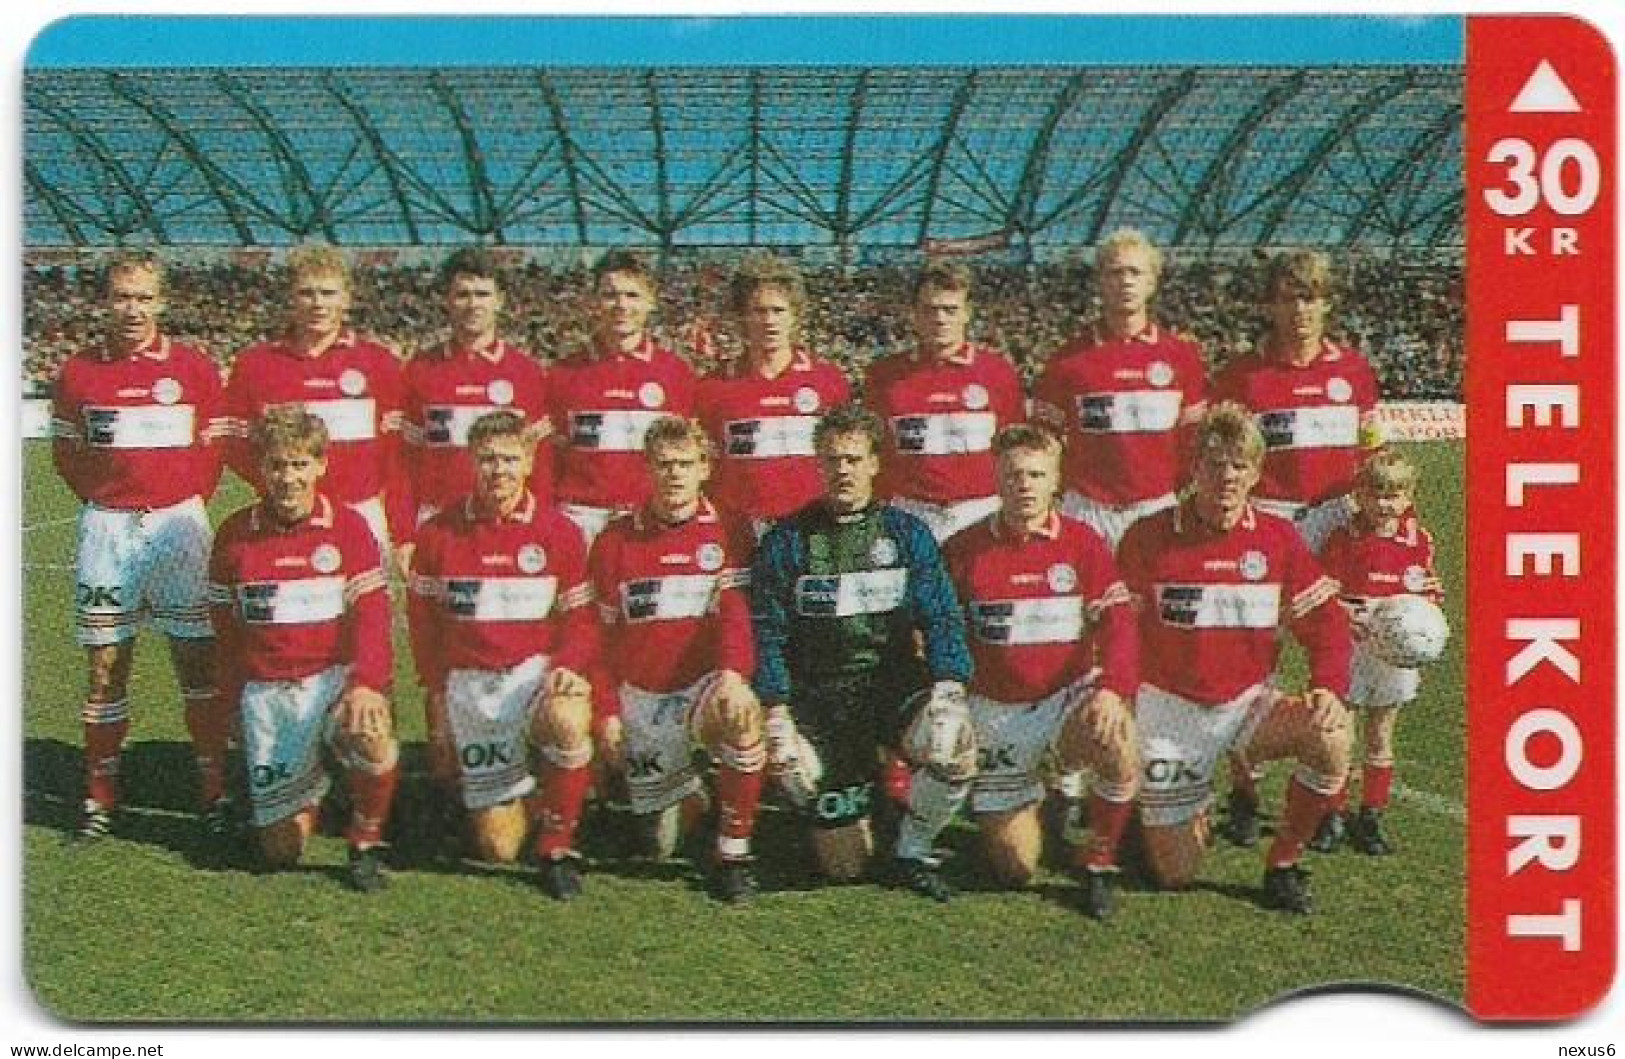 Denmark - Jydsk - Silkeborg Football Team - TDJR007 - 05.1995, 6.000ex, (Serial 2530) 30kr, Used - Danemark